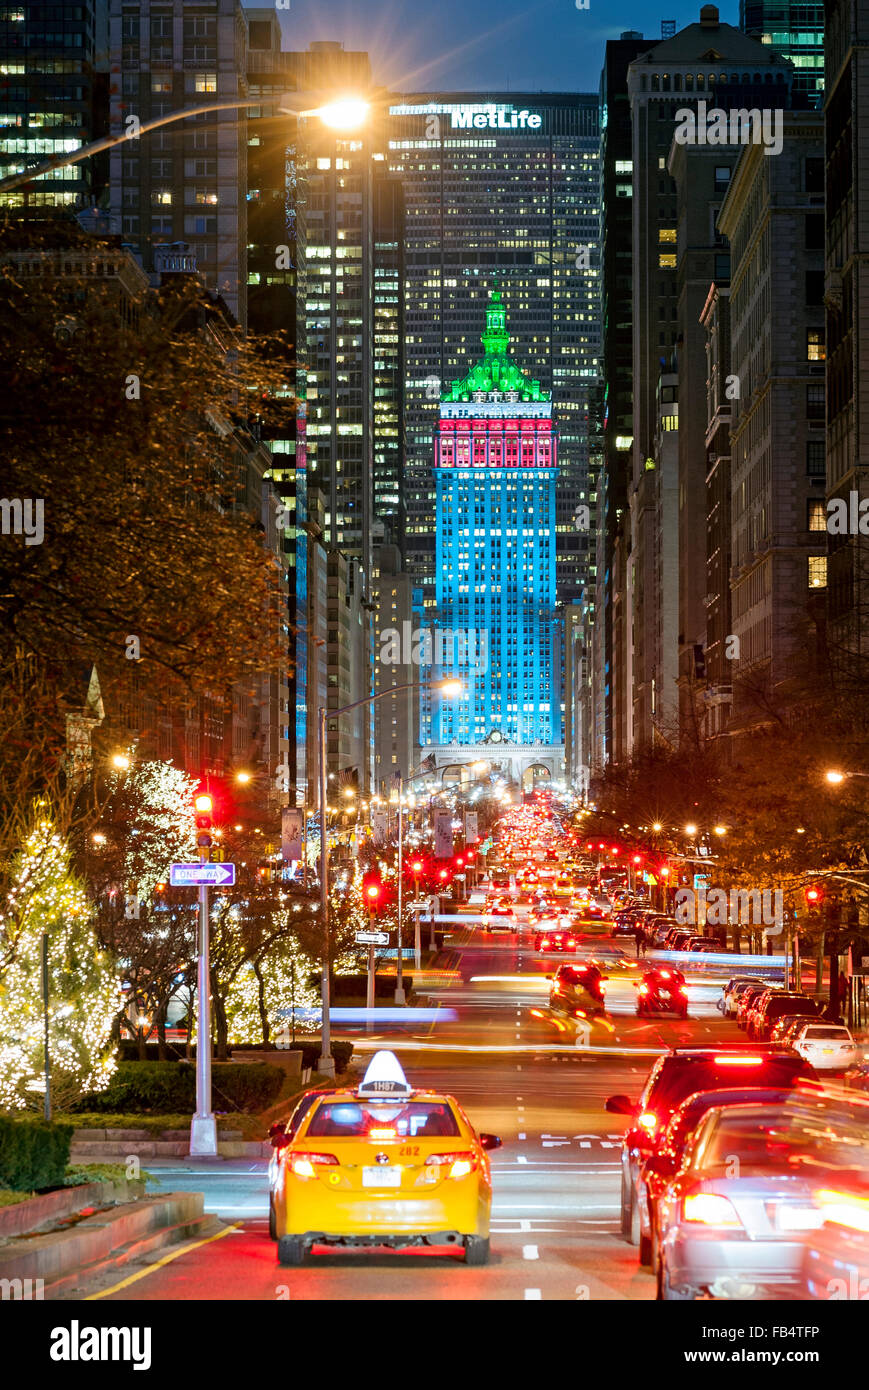 Immagini Natale A New York.Christmas In New York Immagini E Fotos Stock Alamy